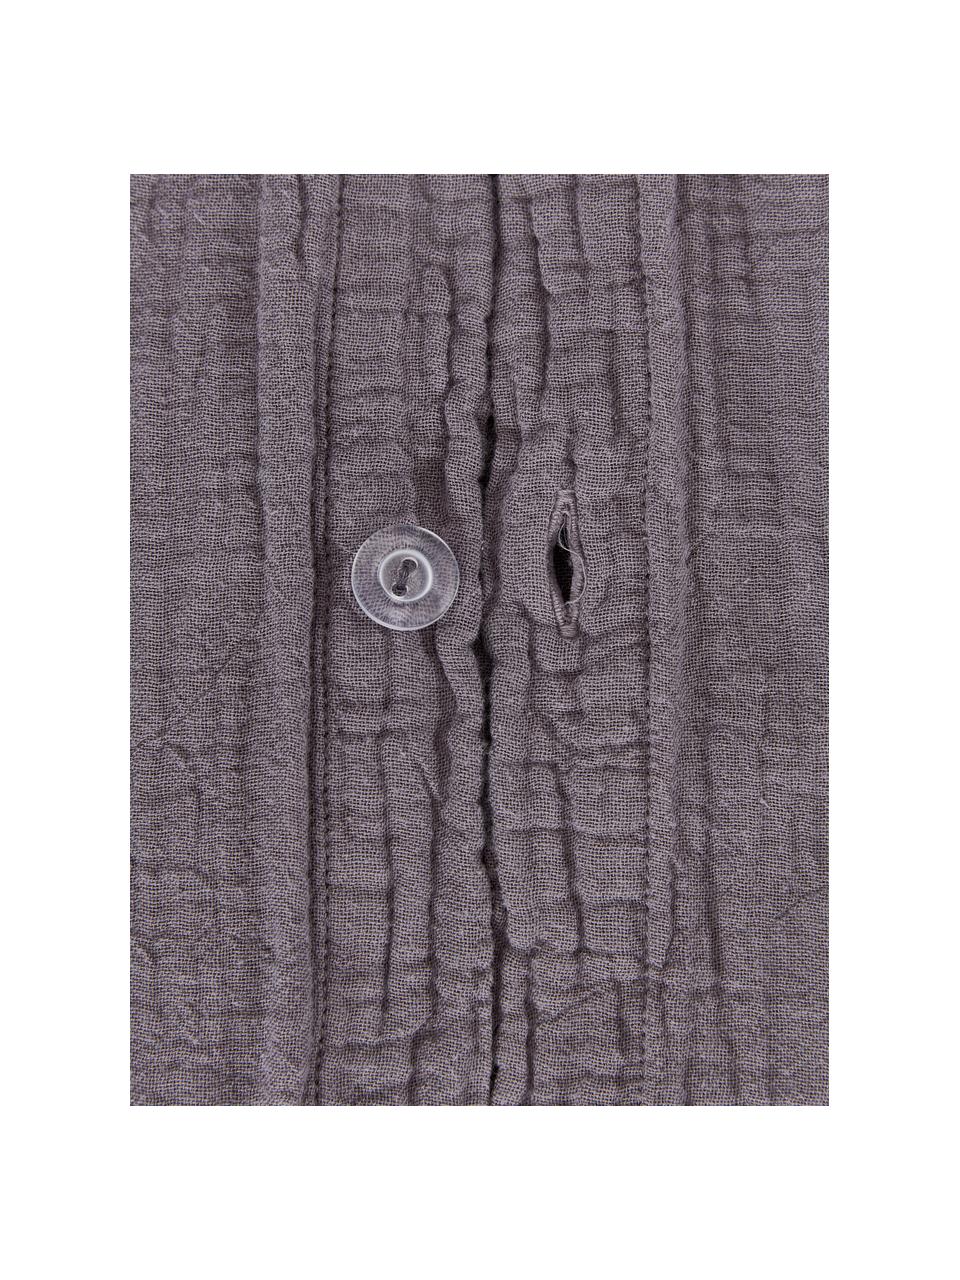 Mousseline dekbedovertrek Odile van katoen in donkergrijs, Donkergrijs, 140 cm x 200 cm